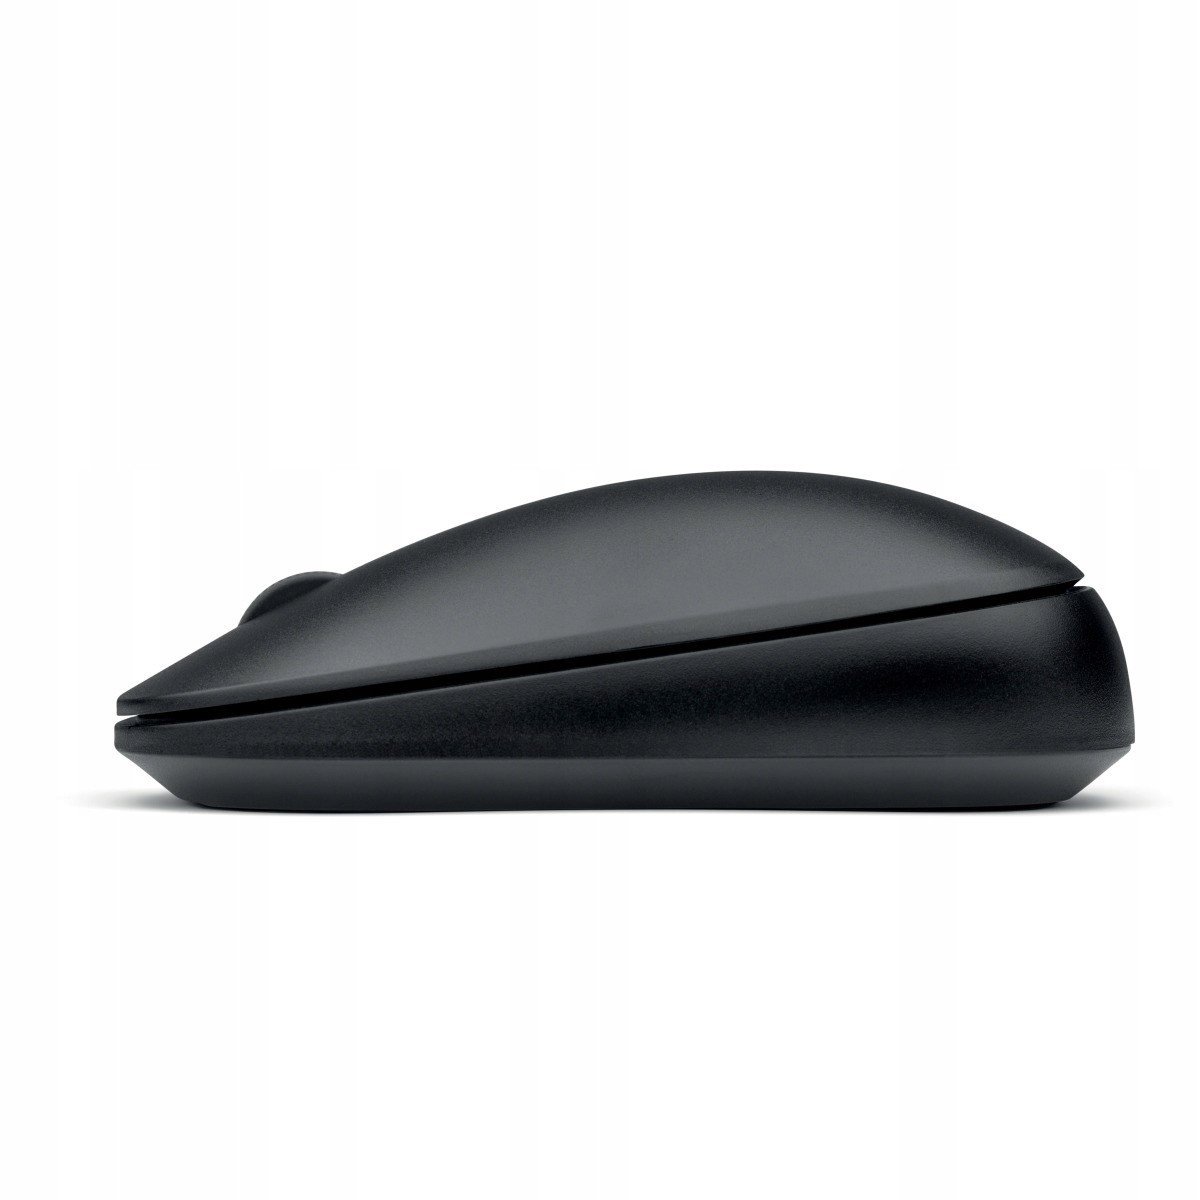 Kensington SureTrack Dual Wireless Mouse - Myš - optický - 4 tlačítka - bezdrátový - 2.4 GHz, Bluetooth 3.0, Bluetooth 5.0 LE - bezdrátový přijímač USB - černá, K75298WW